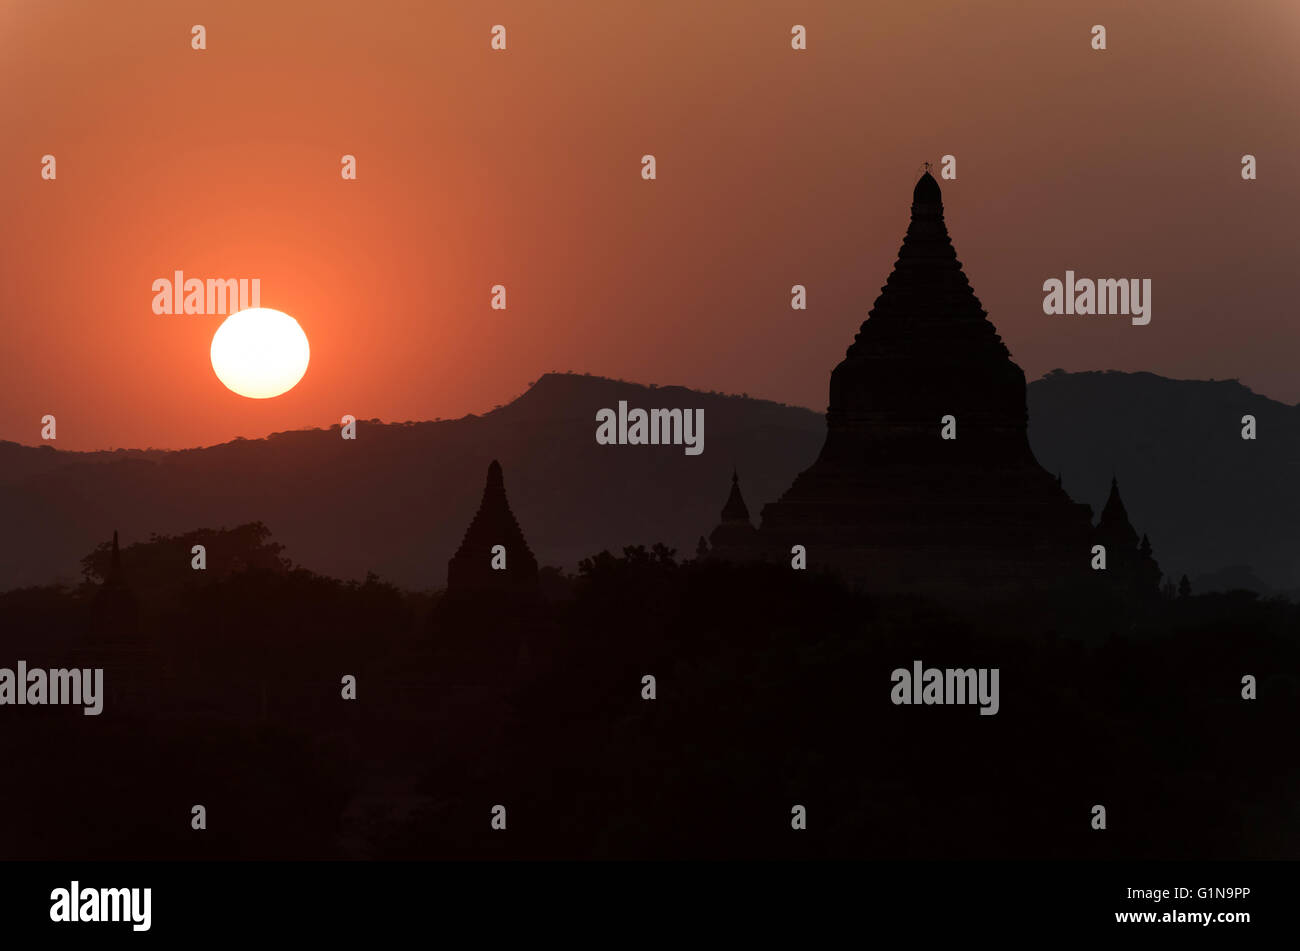 Sunset over Mingalazedi - Mingalar Zedi - Pagoda, Old Bagan, Burma - Myanmar Stock Photo